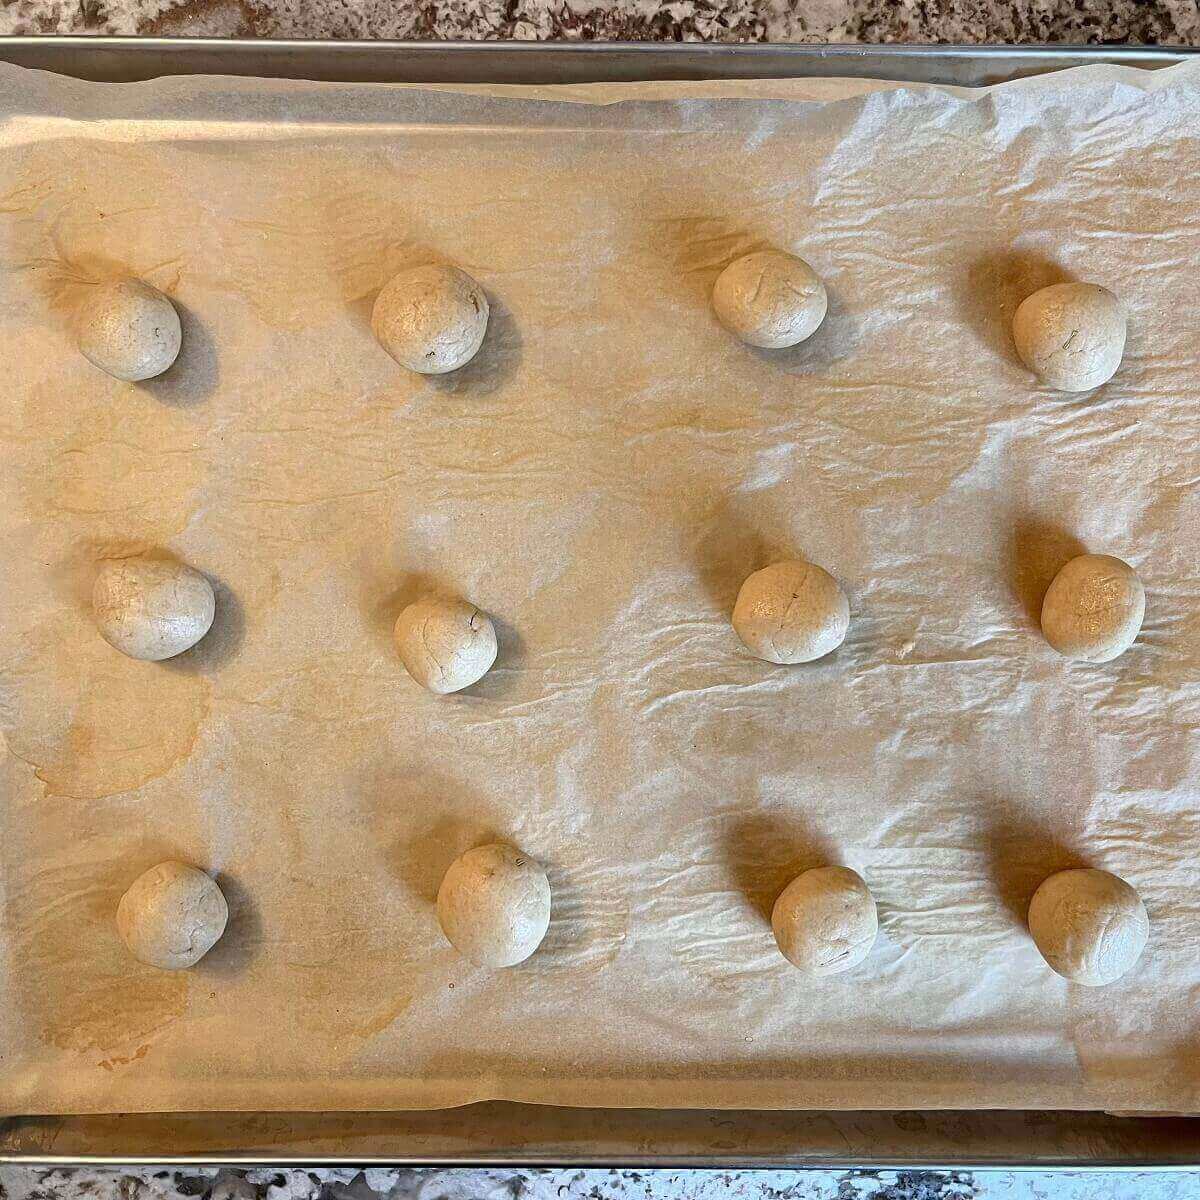 Raw amaranth dough balls on a sheet pan.